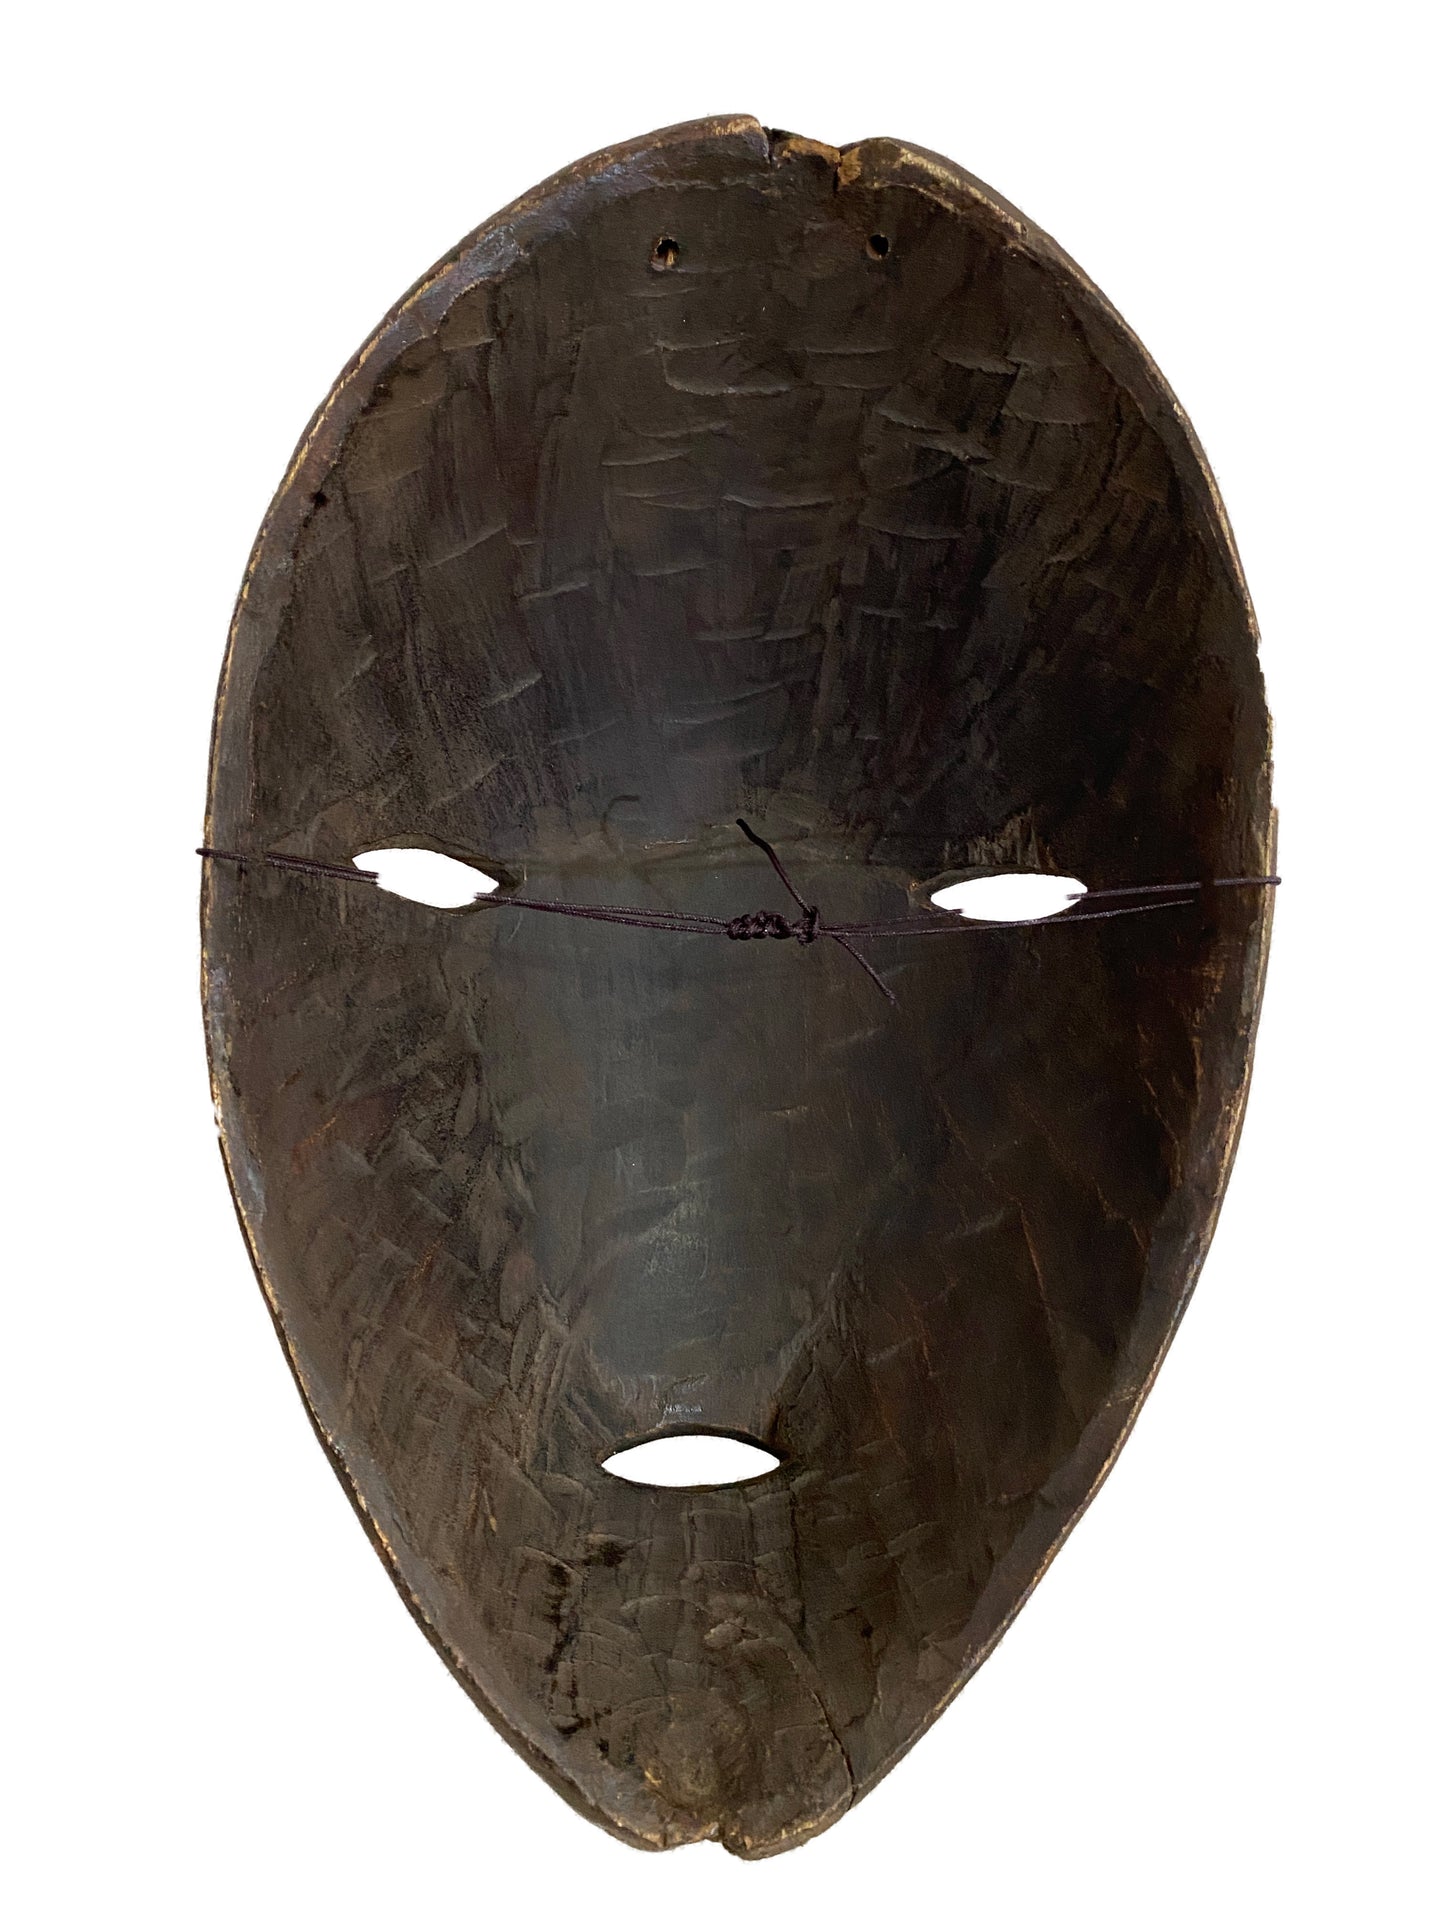 #3845A   African Songye Kifwebe Wooden Bird  Mask 15.25" H